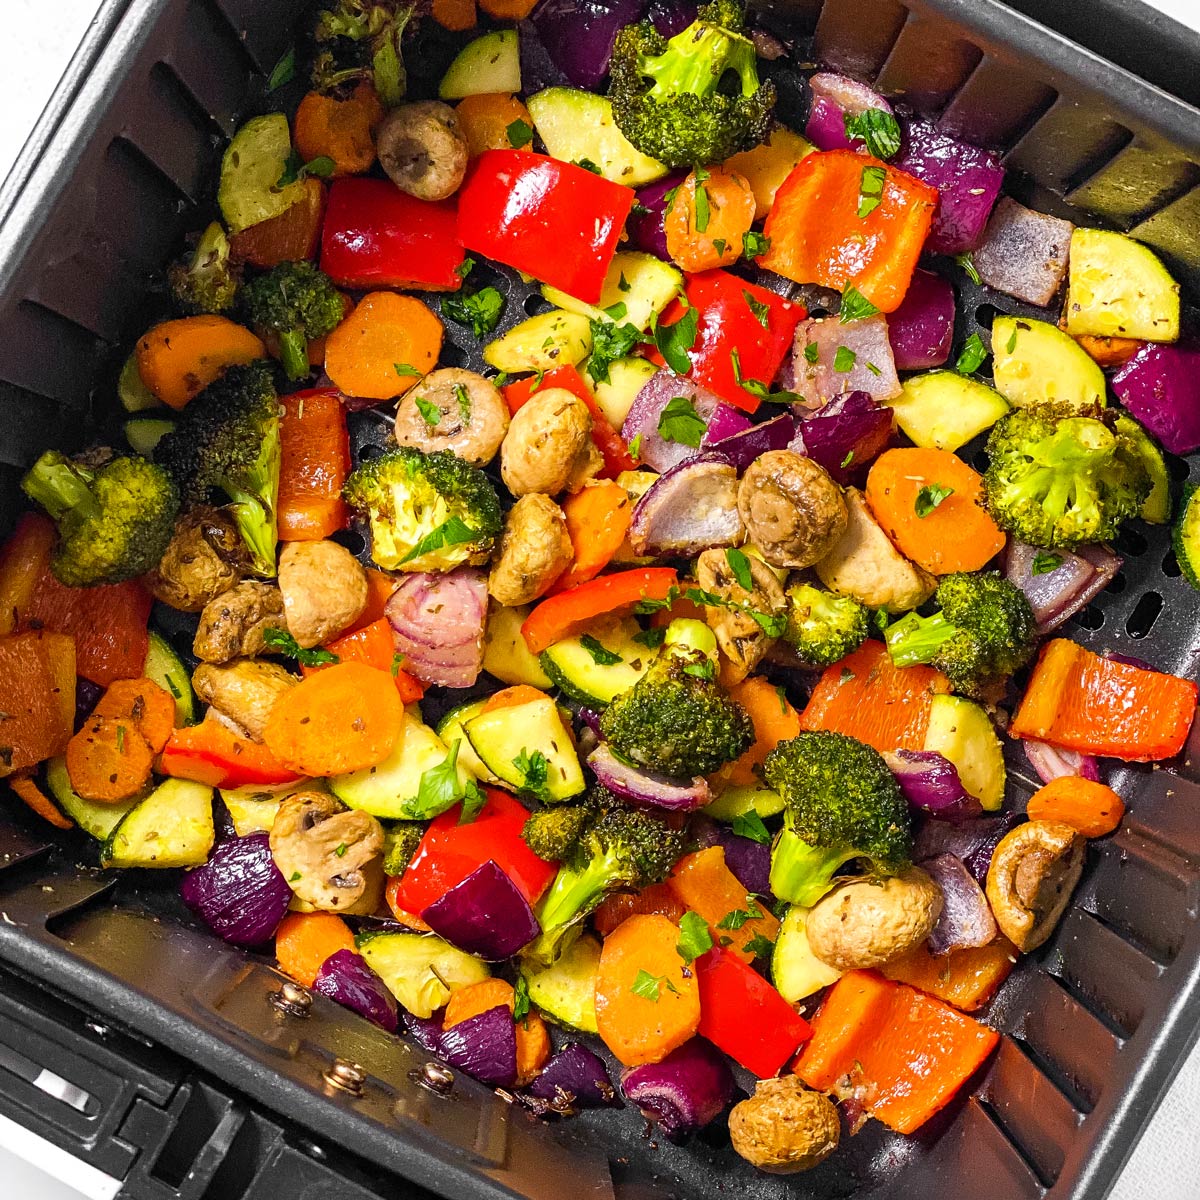 https://www.savorynothings.com/wp-content/uploads/2022/01/air-fryer-vegetables-recipe-image-sq.jpg